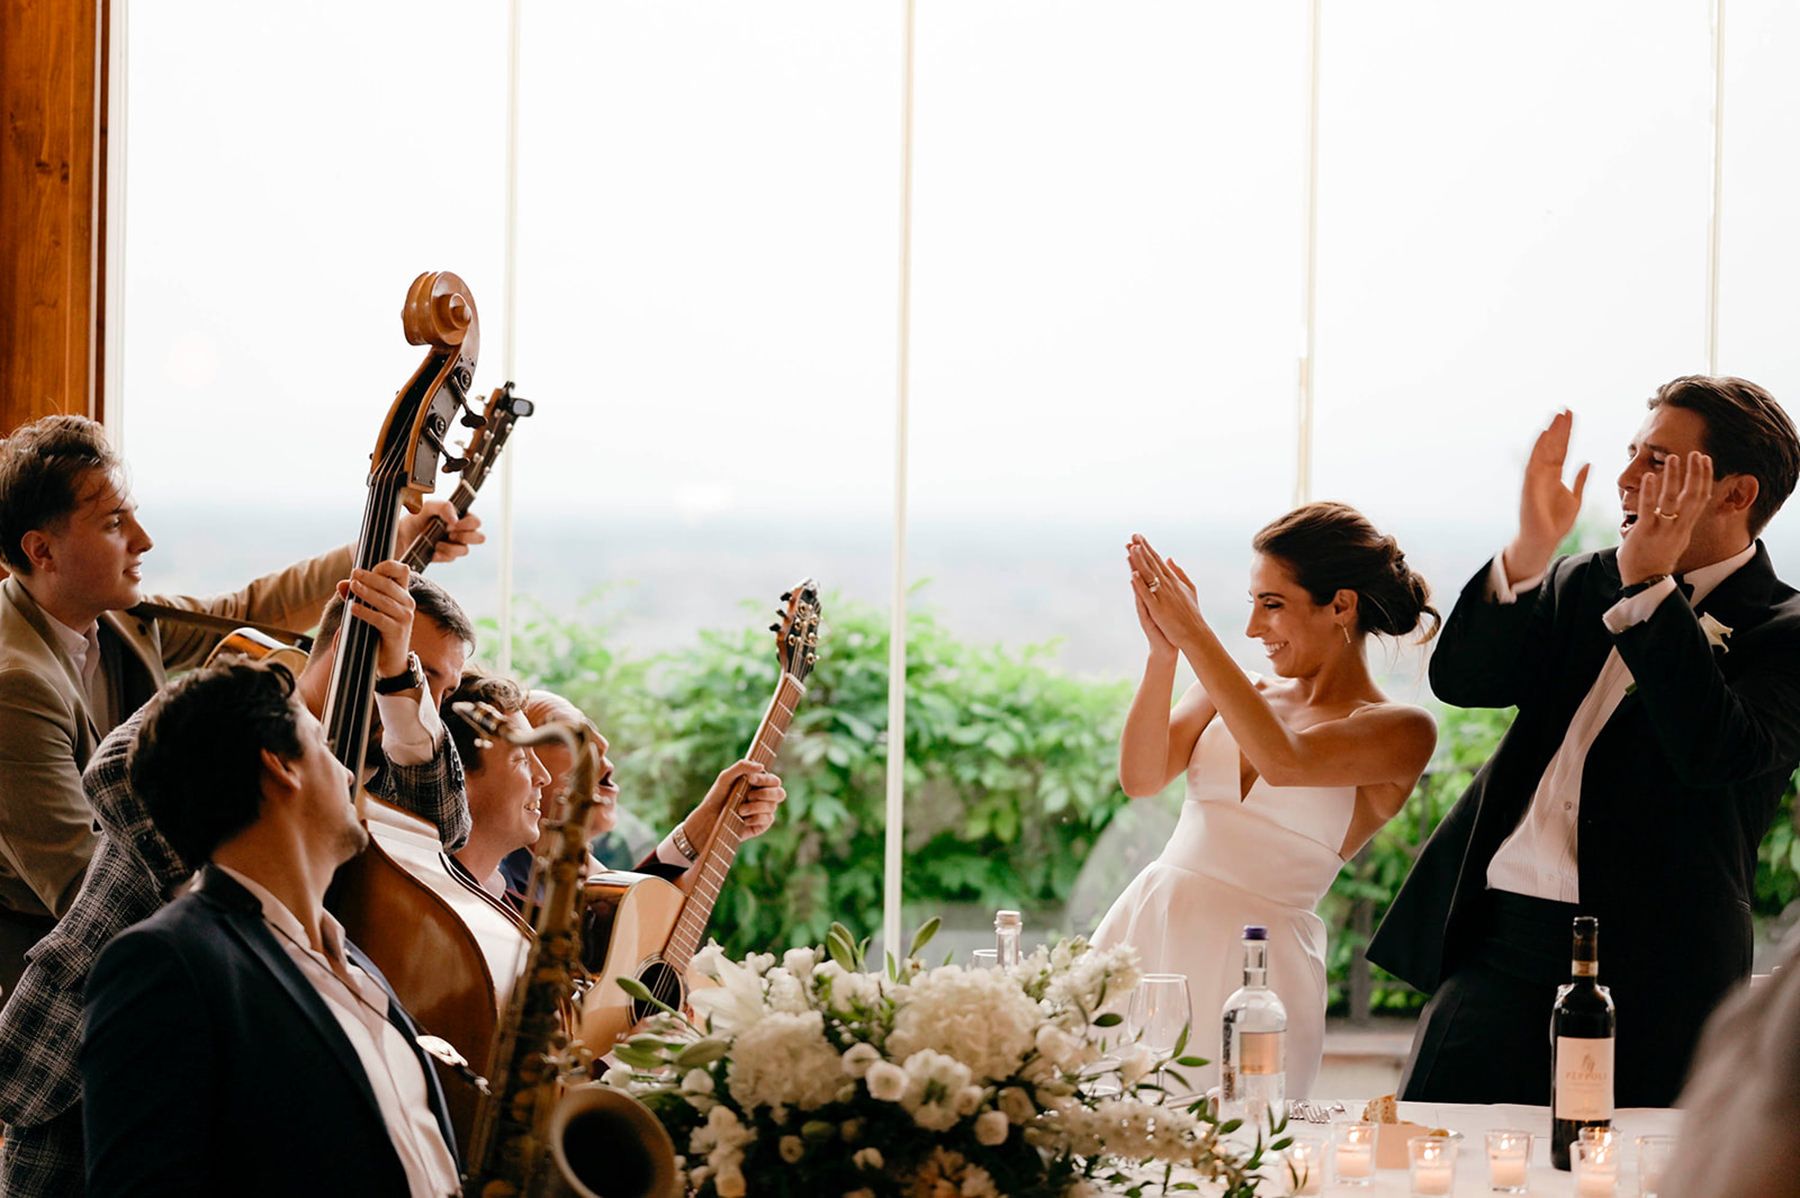 ITALIAN WEDDING Music & Entertainment